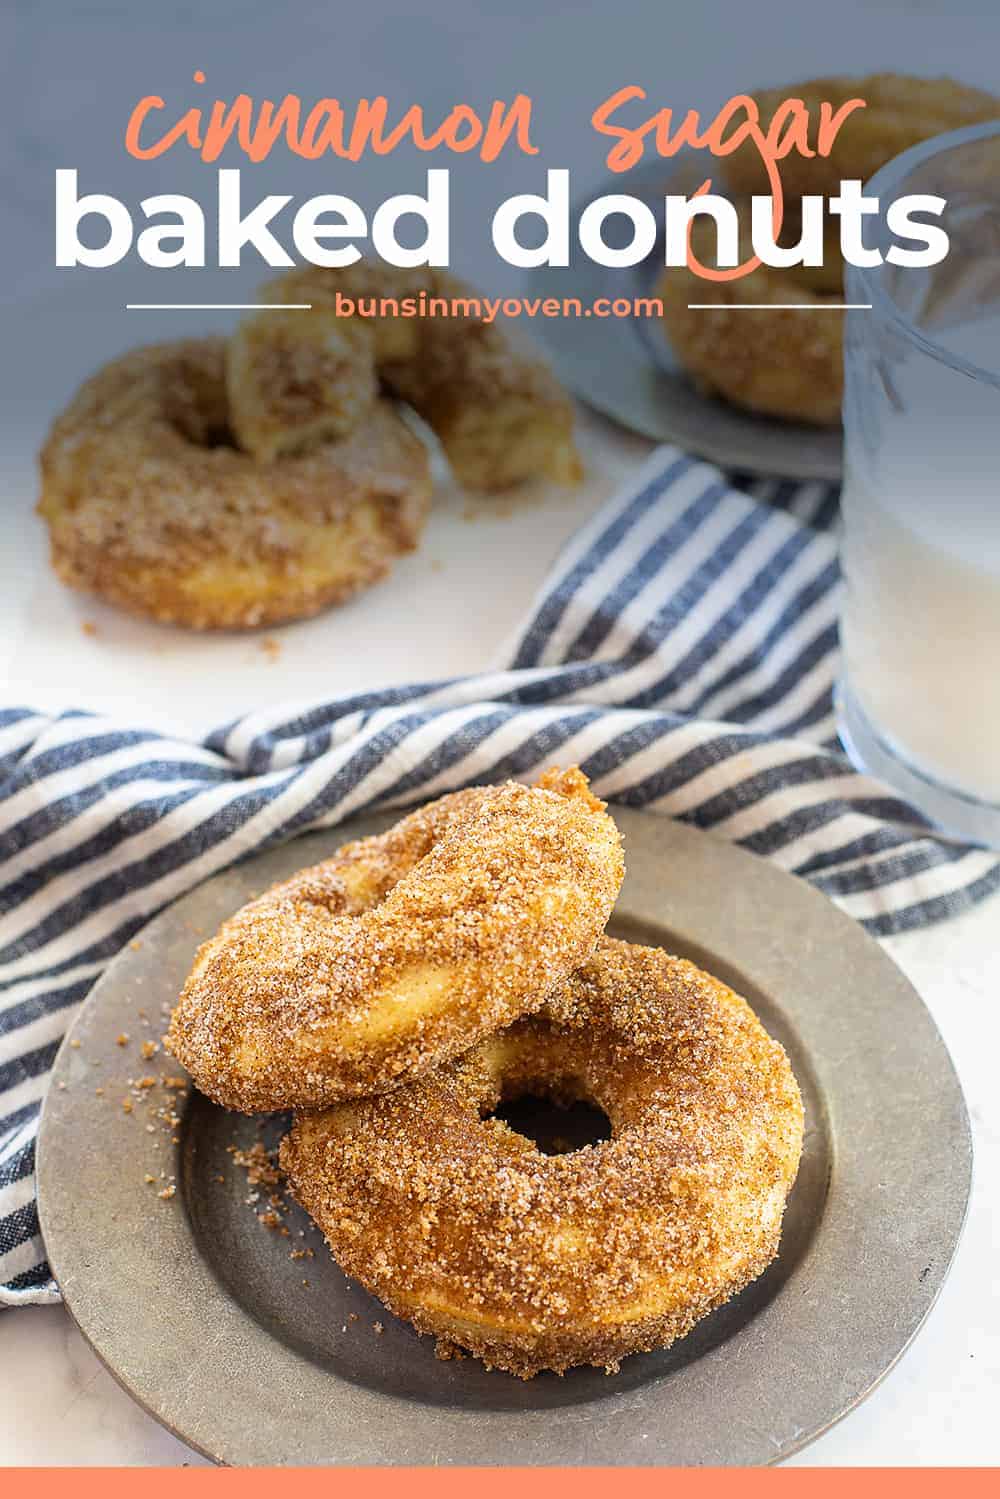 cinnamon sugar baked donuts recipe for pinterest.